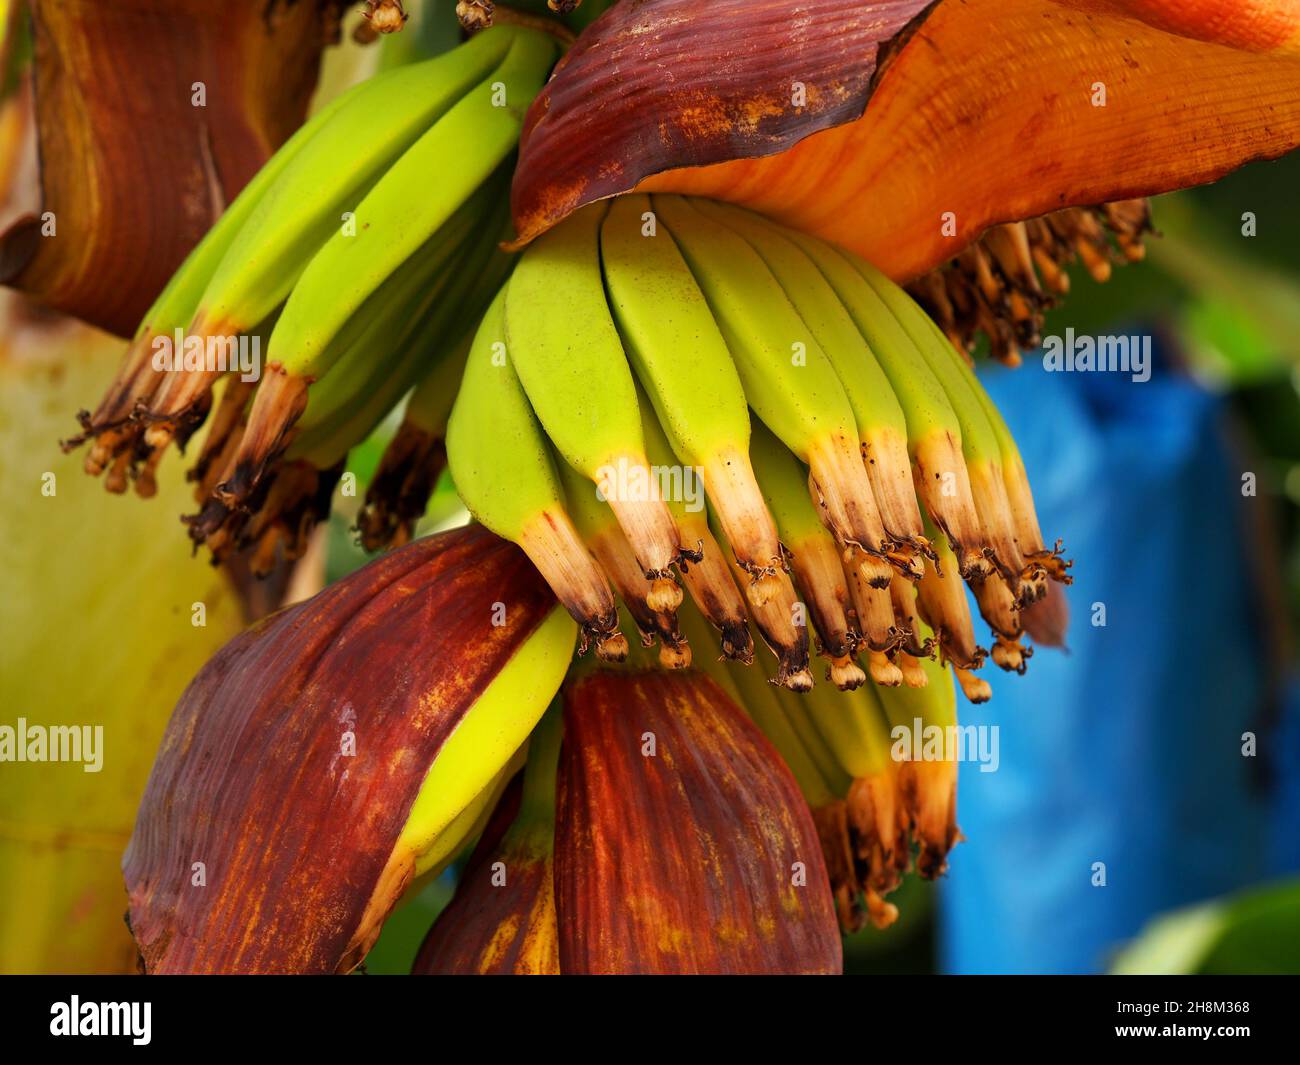 Banana ovaries on a blurred background. Macro shoot. Stock Photo